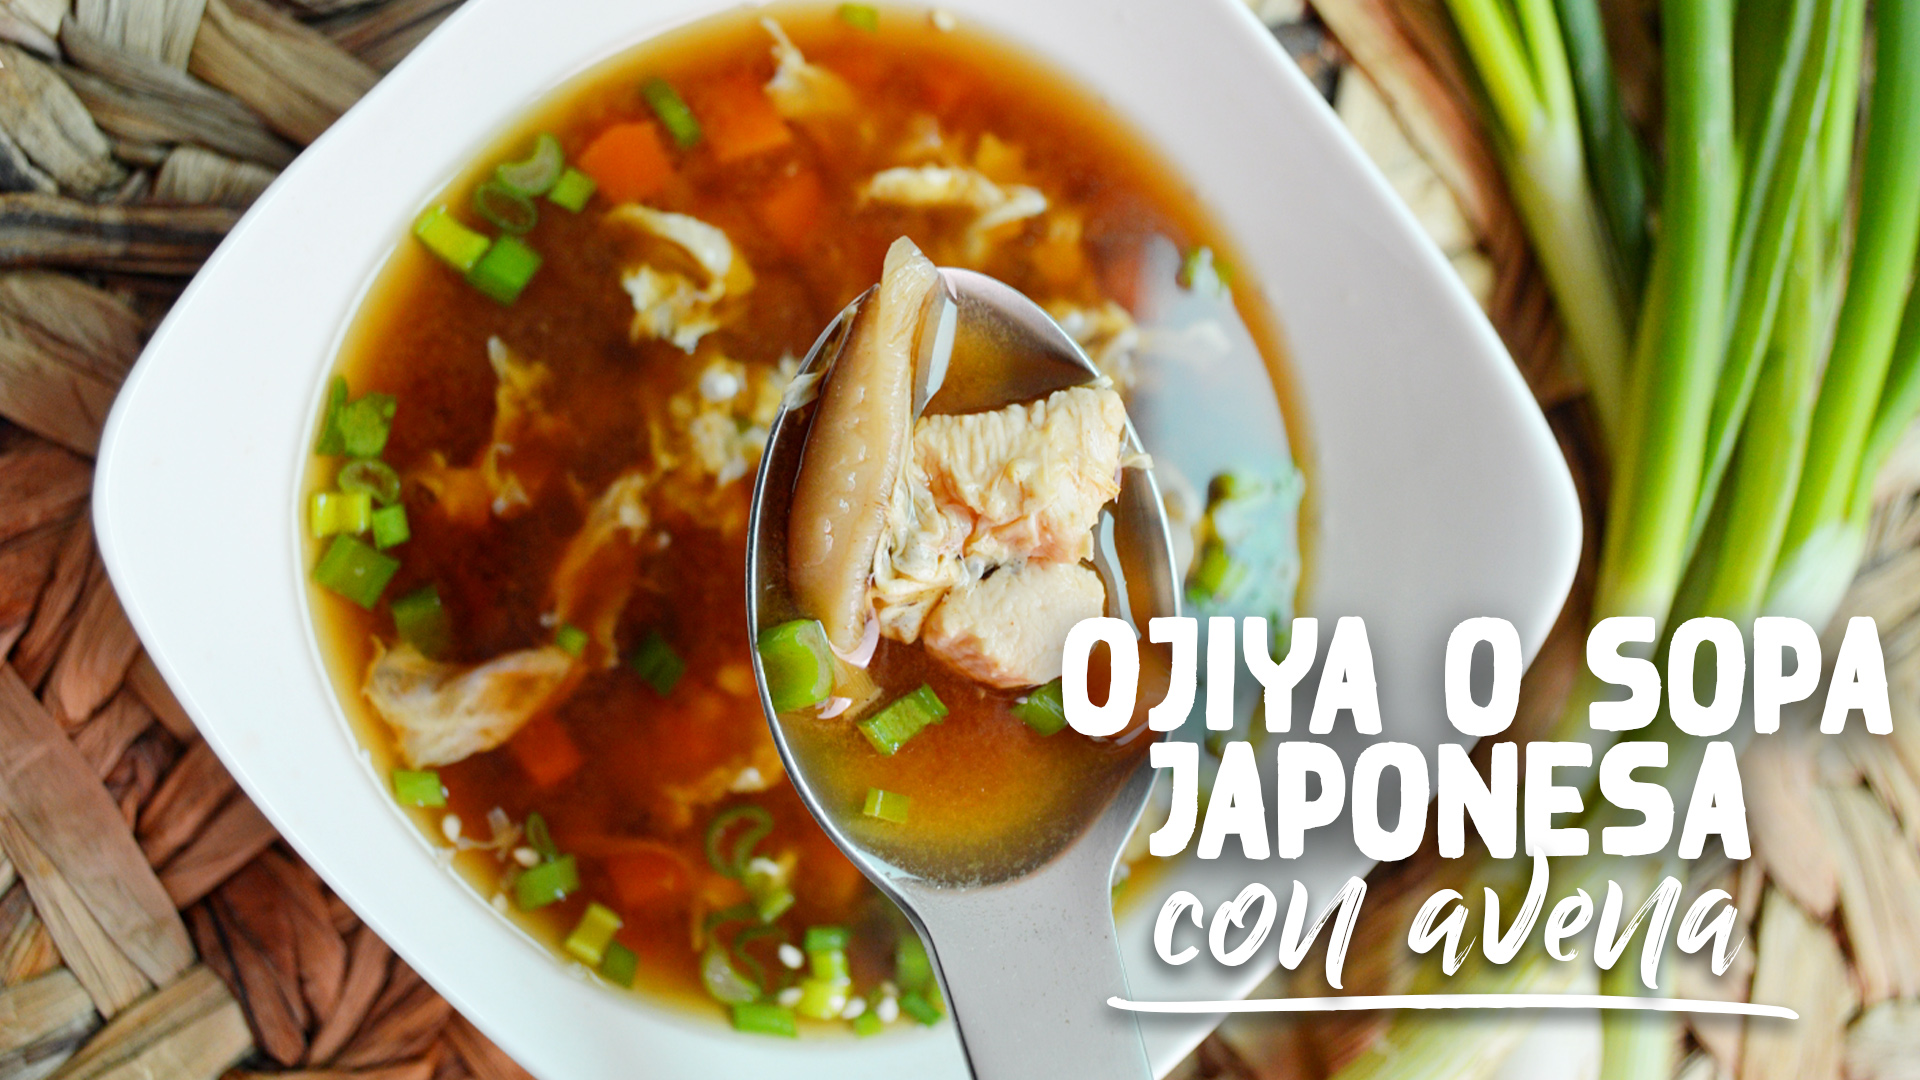 Ojiya o sopa japonesa con vegetales